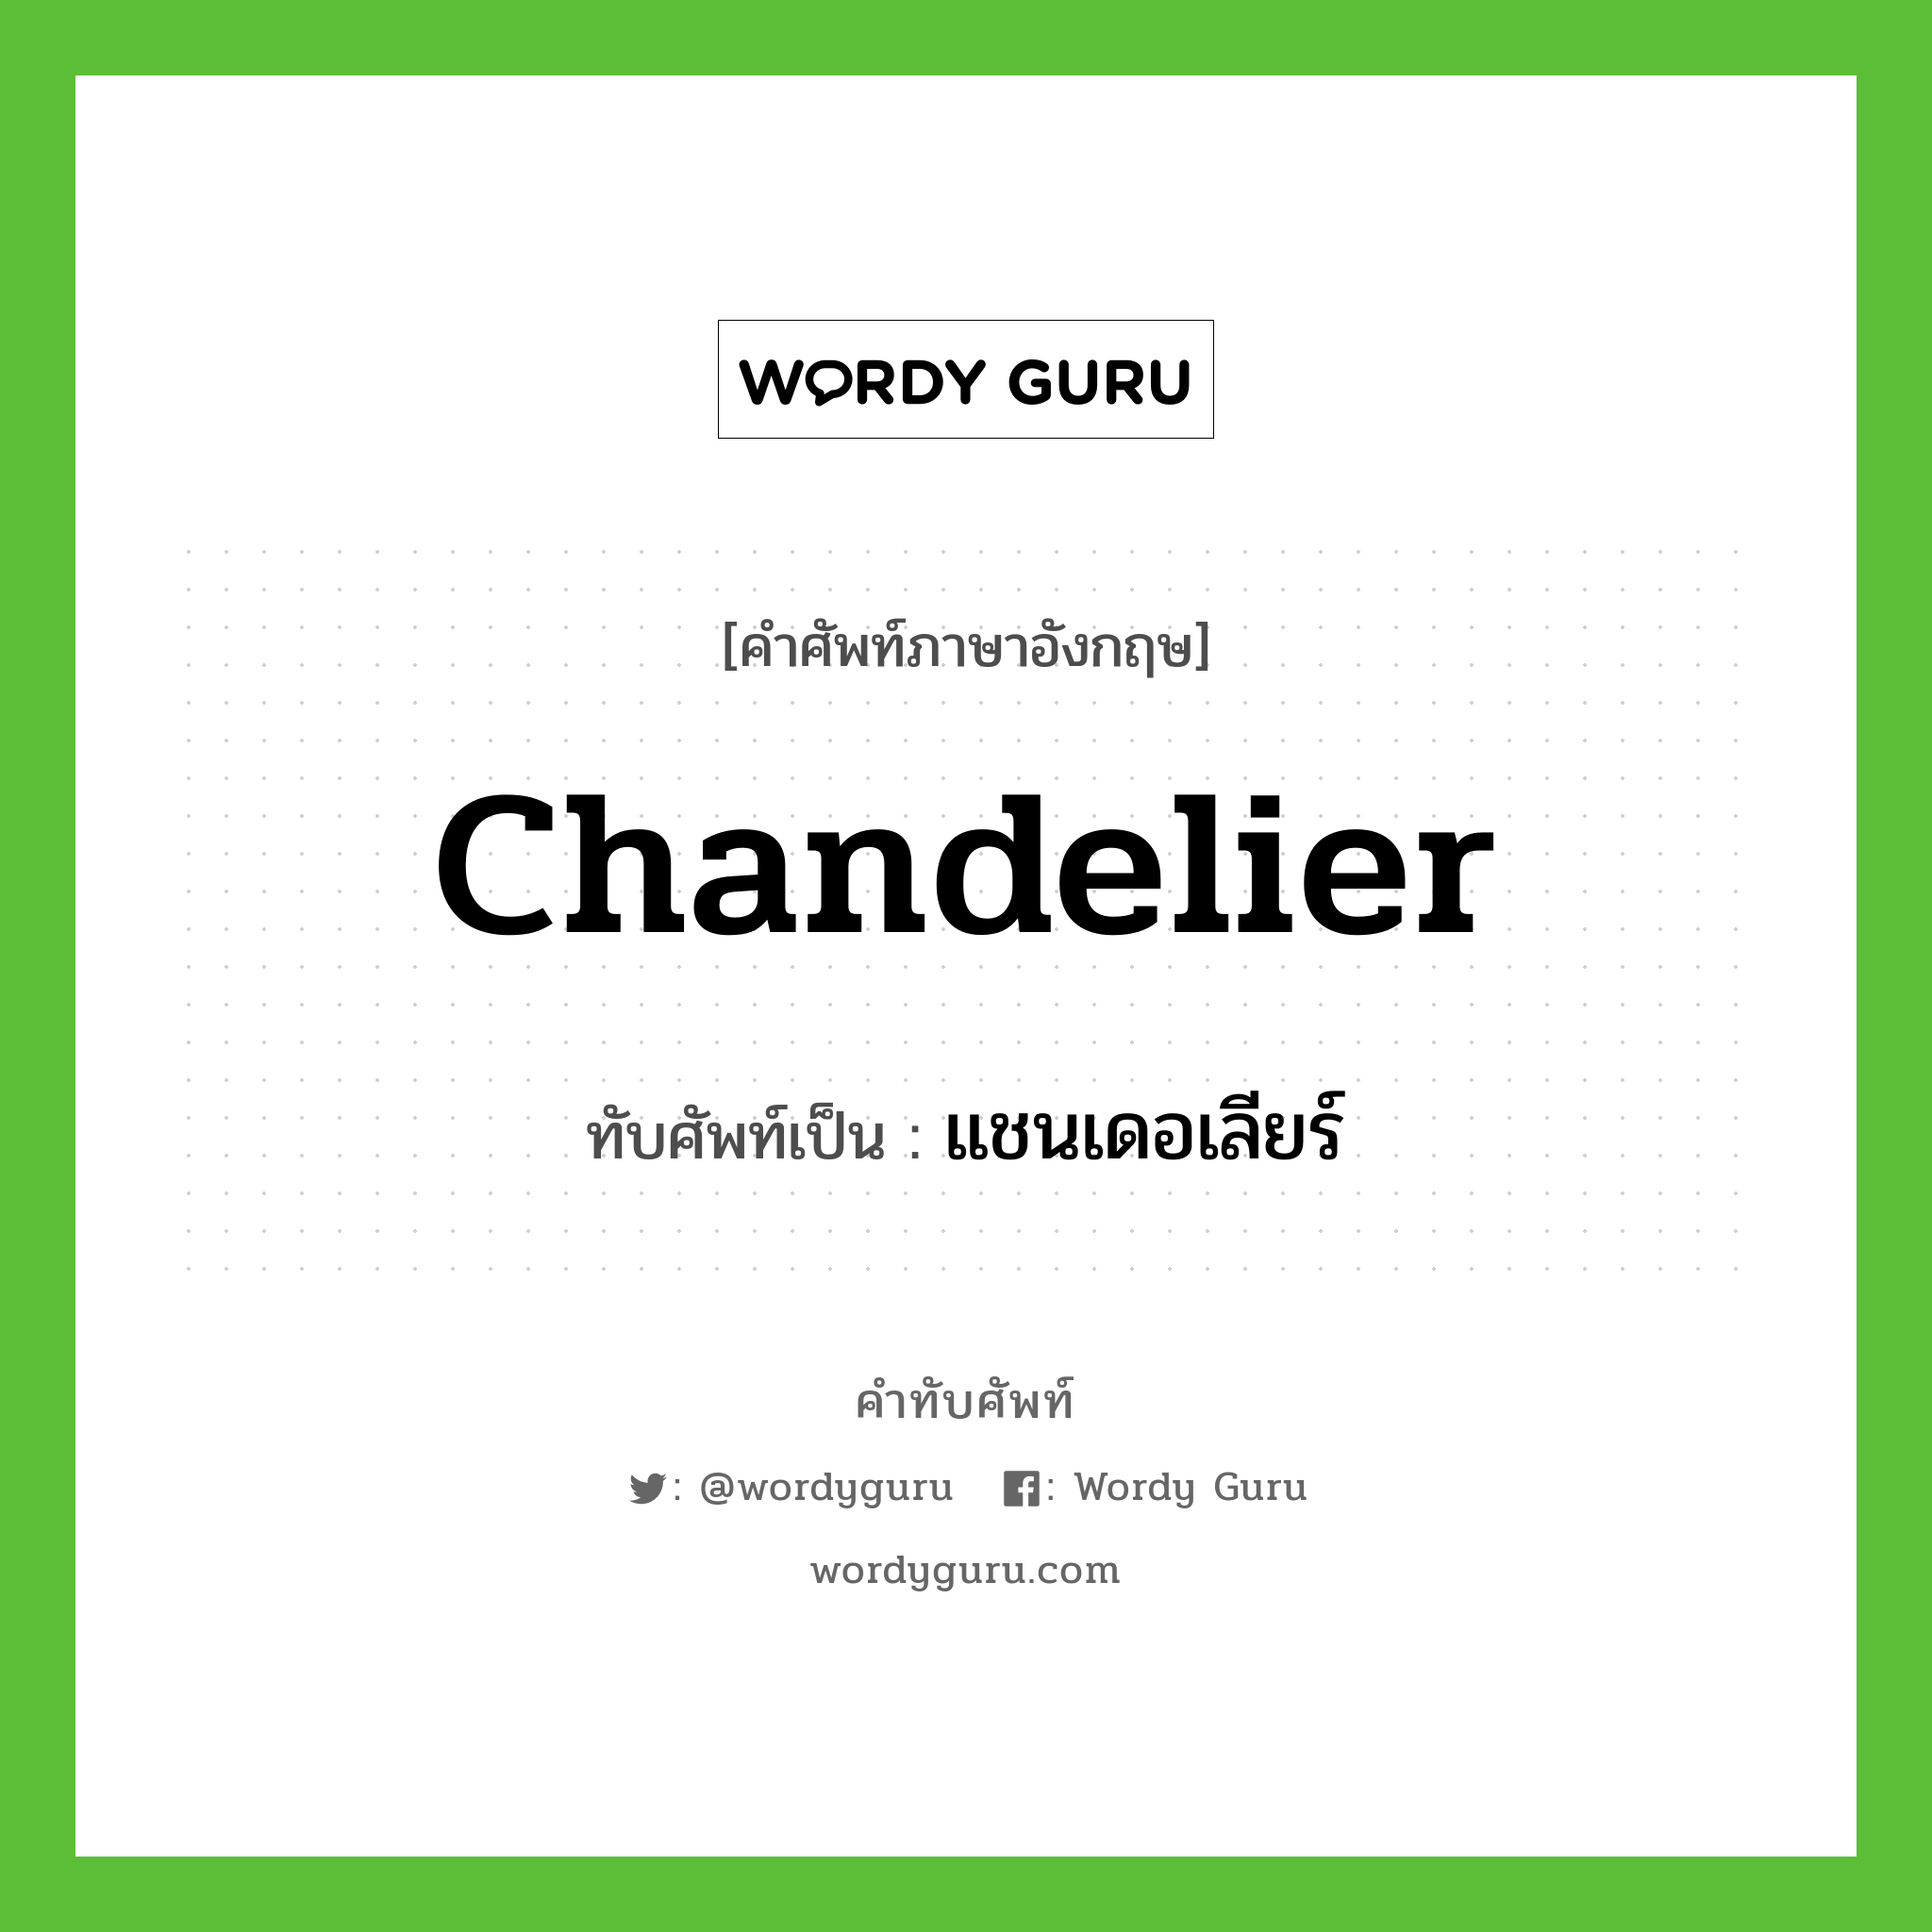 chandelier เขียนเป็นคำไทยว่าอะไร?, คำศัพท์ภาษาอังกฤษ chandelier ทับศัพท์เป็น แชนเดอเลียร์